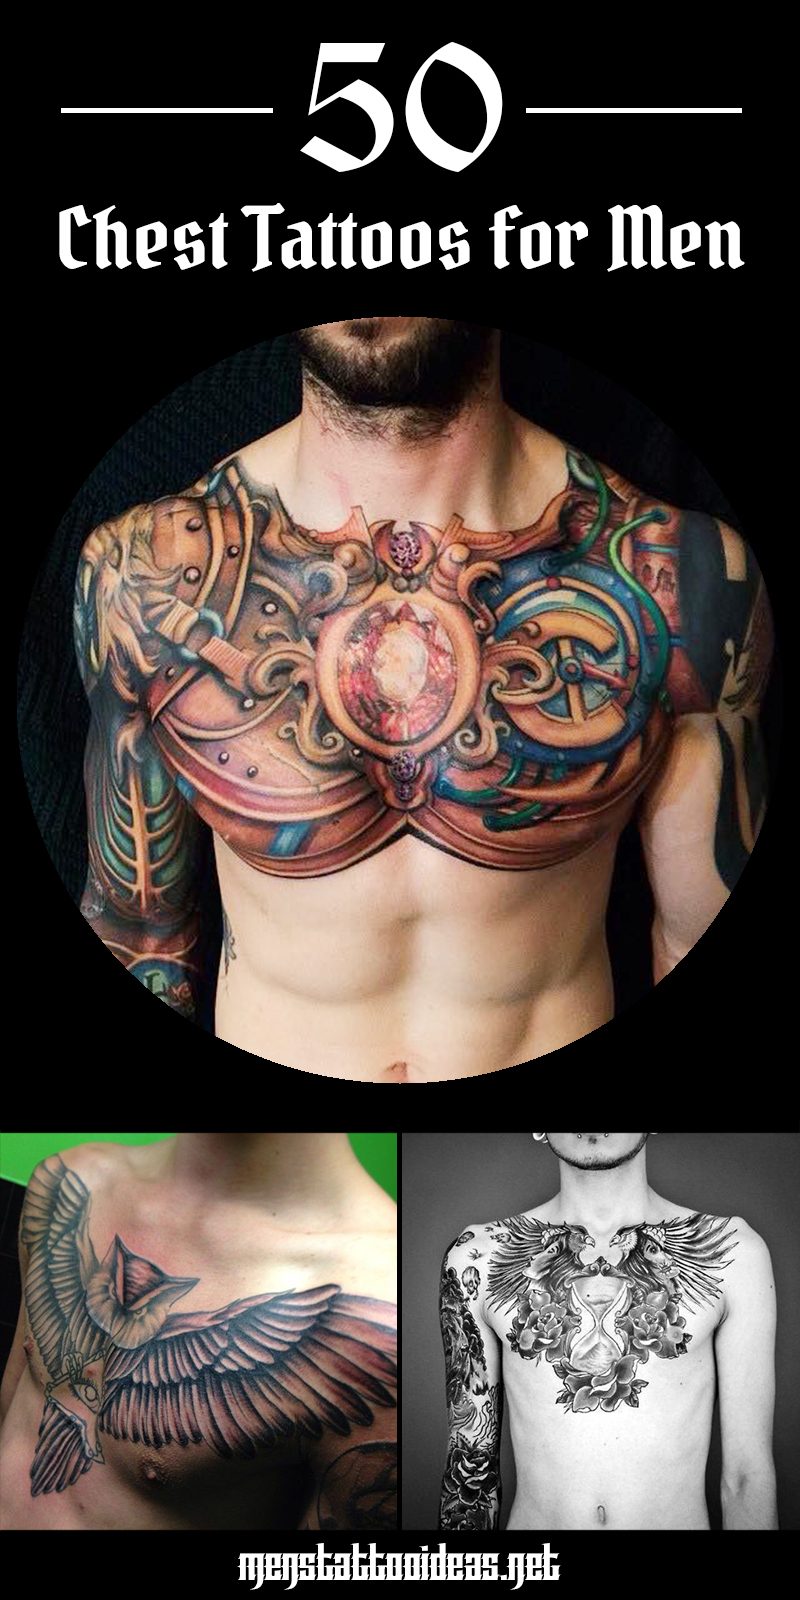 Chest Tattoos for Men - Men's Tattoo Ideas